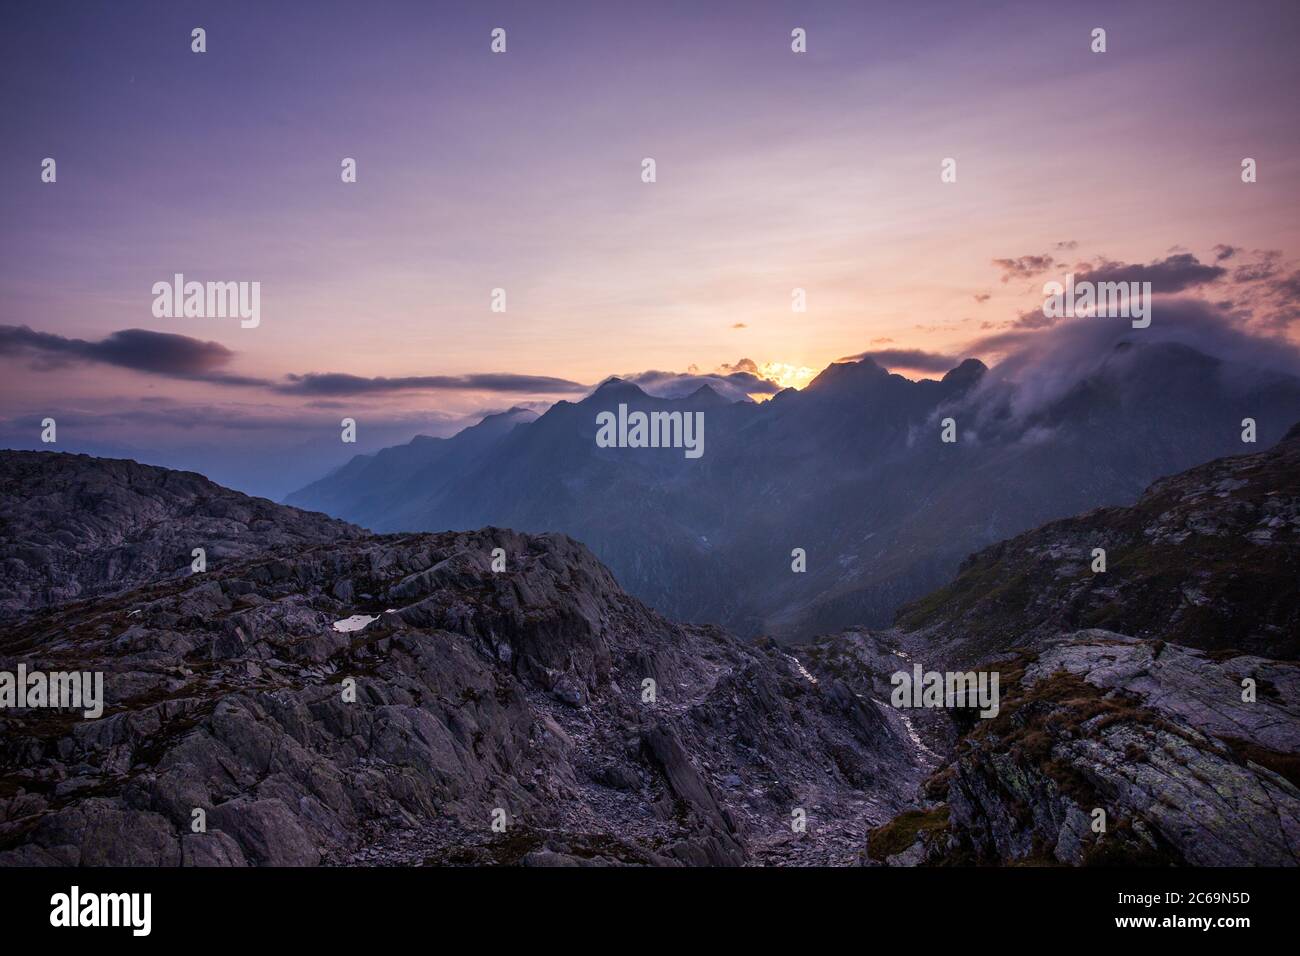 Sonnenuntergang in den Schweizer Alpen - Huette Cadlimo am Lukmanierpass, Kanton Tessin, Schweiz Stockfoto